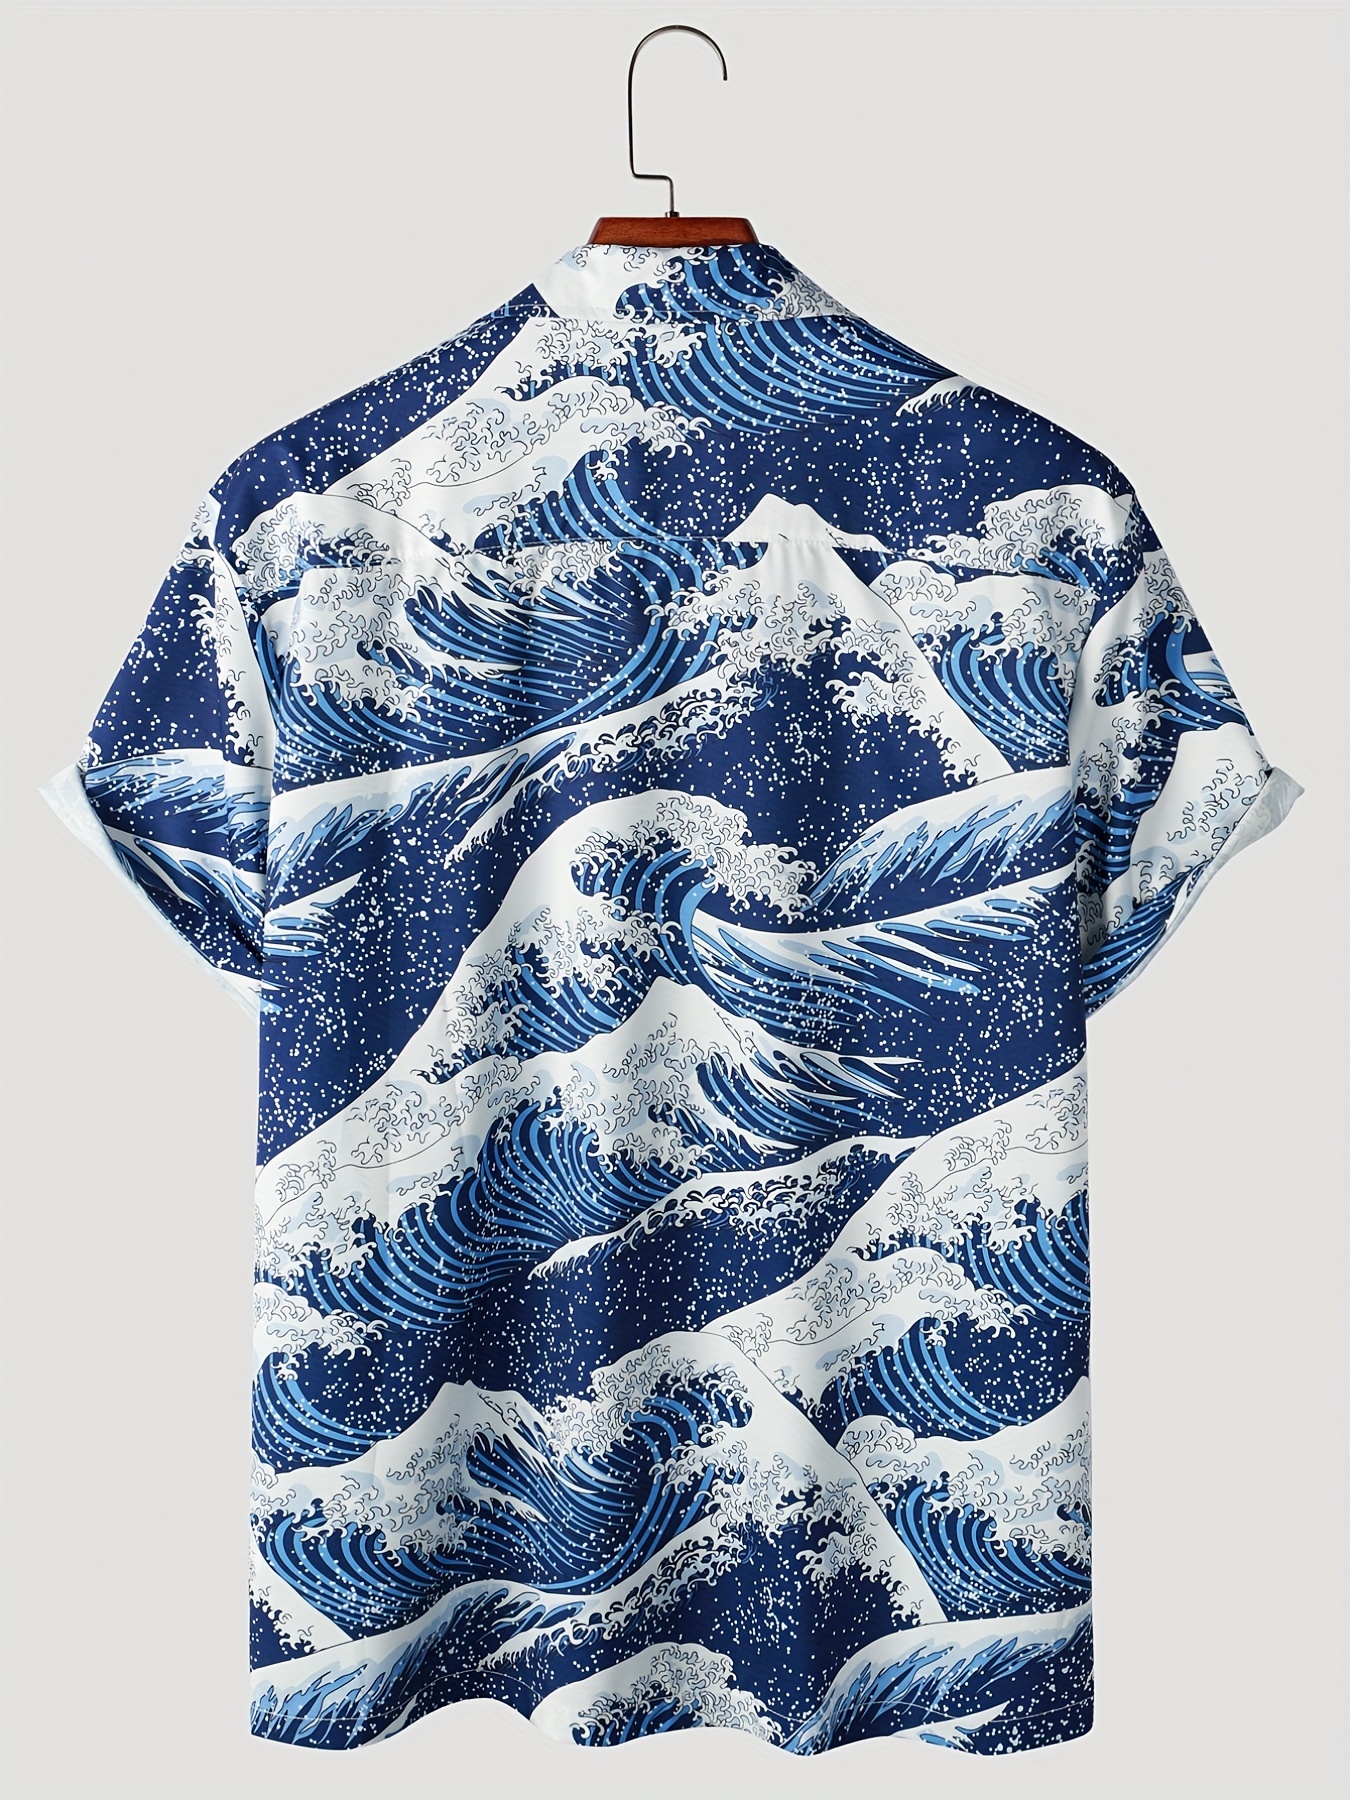 Sea Waves Full Pattern, Men's Outfits, Revere Collar Short Sleeve